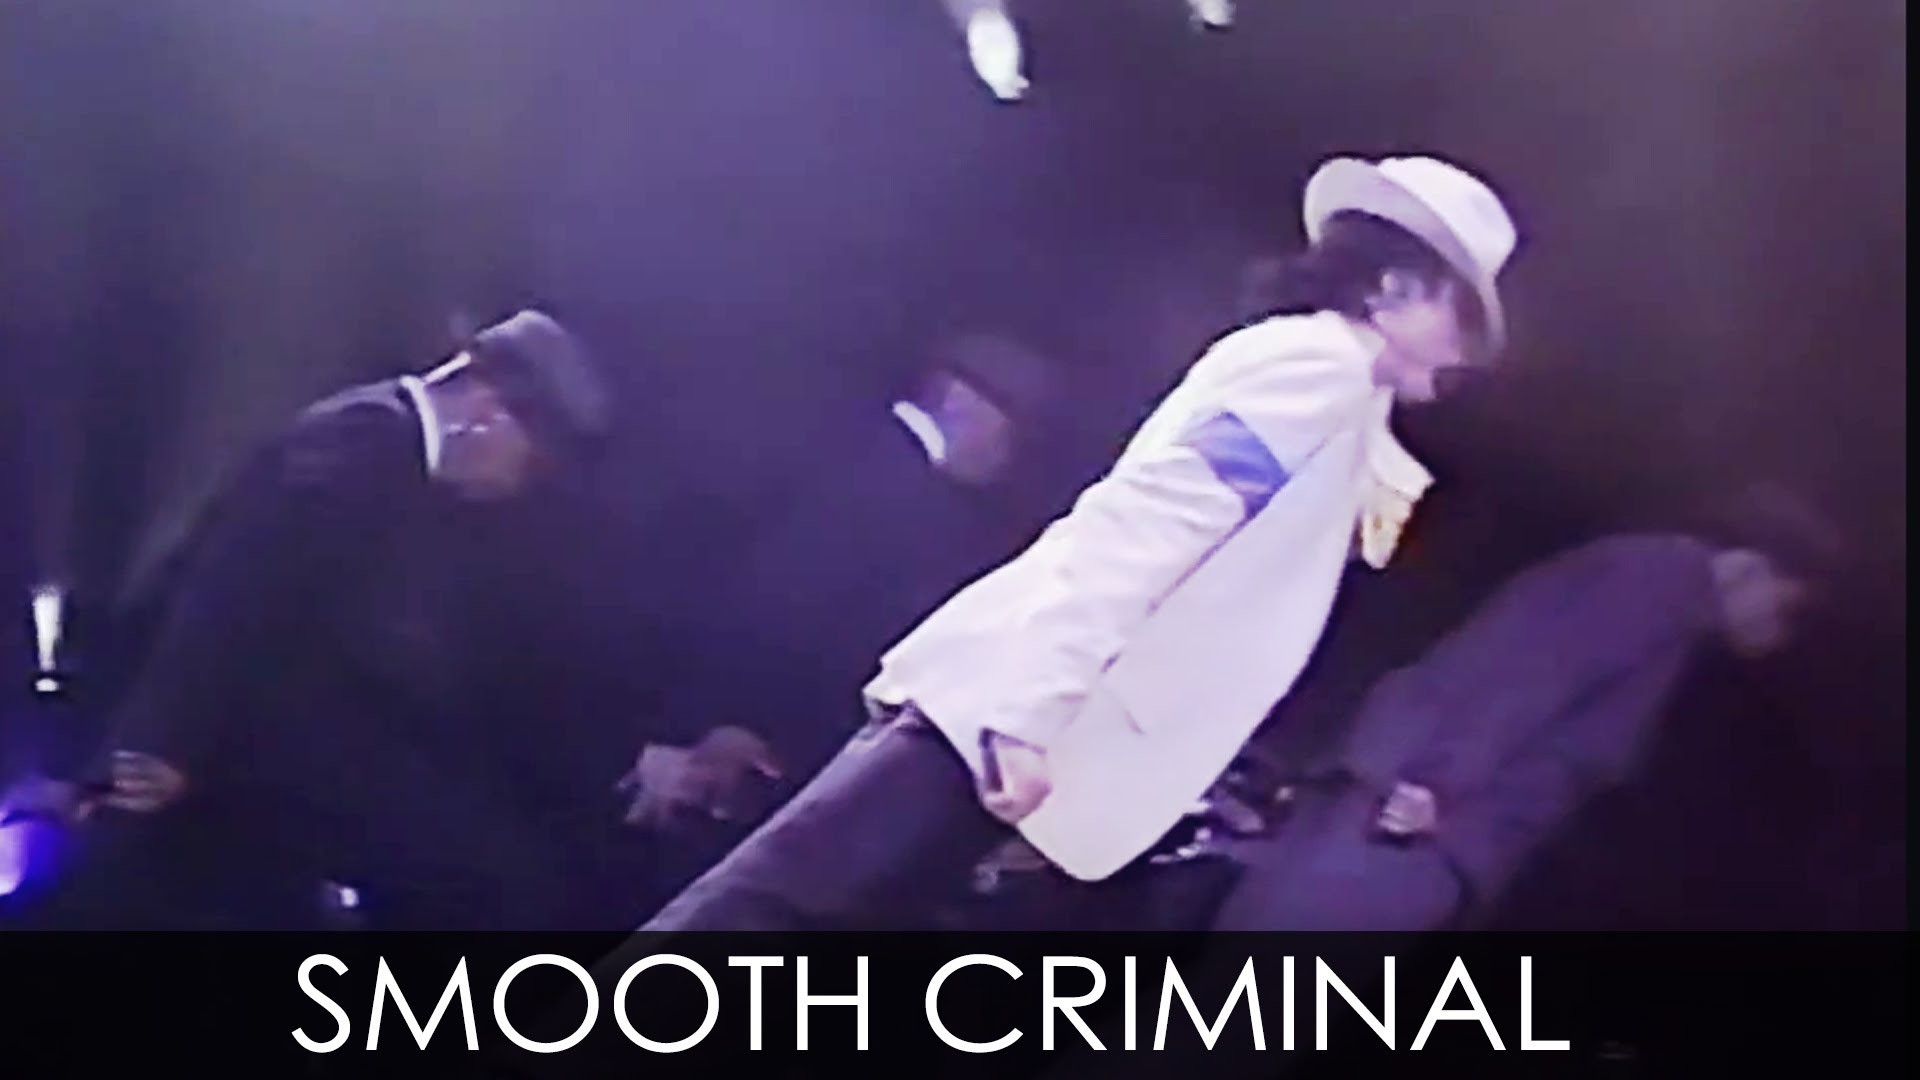 1920x1080 Michael Jackson - "Smooth Criminal" live Dangerous Tour Argentina 1993 -  Enhanced - HD - YouTube